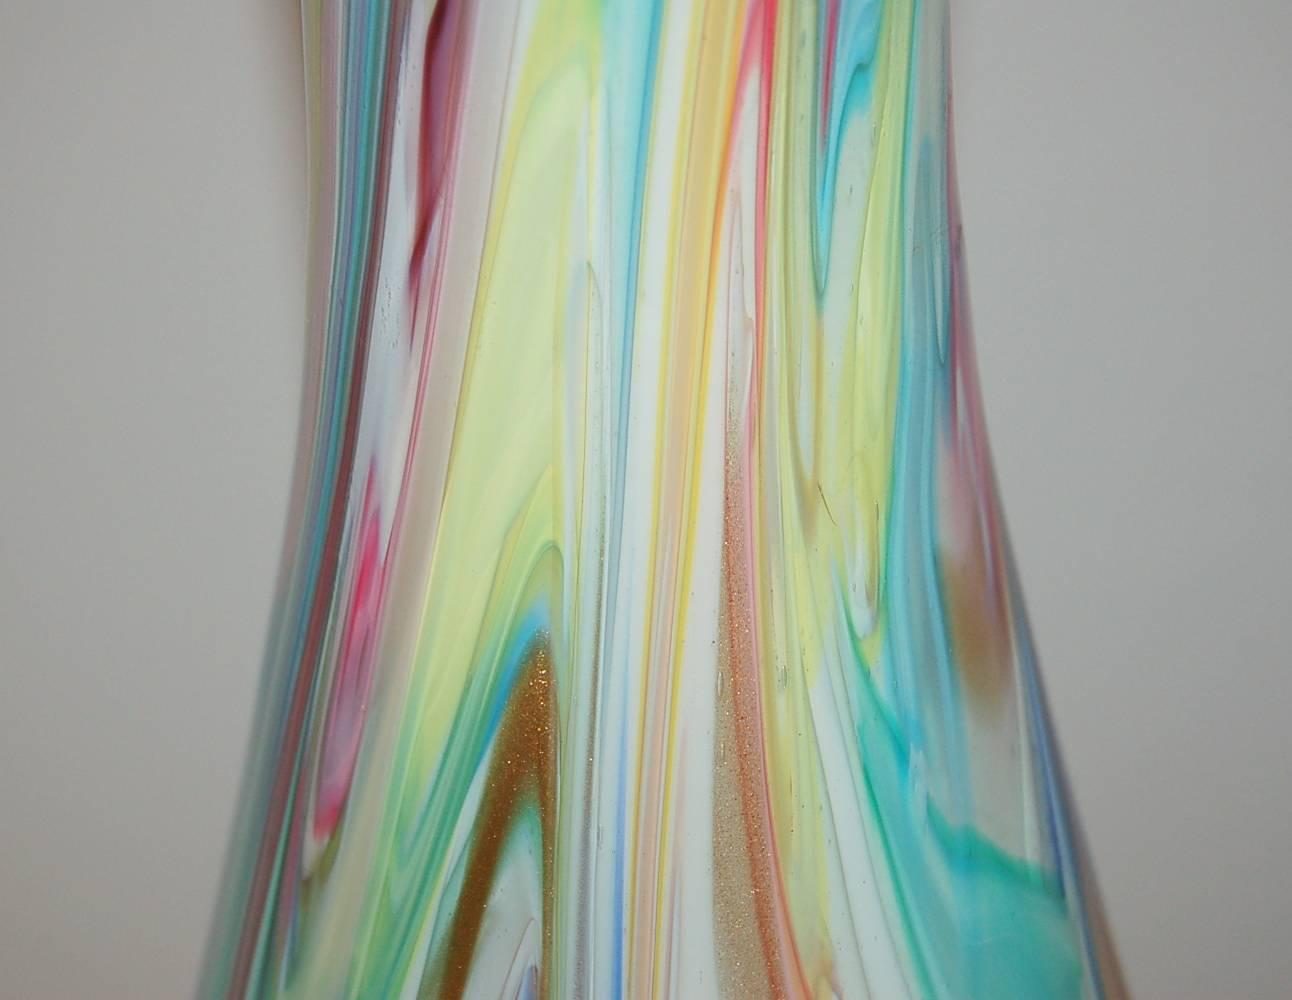 Fratelli Toso Murano Lamps of Multicolored Swirls For Sale 2